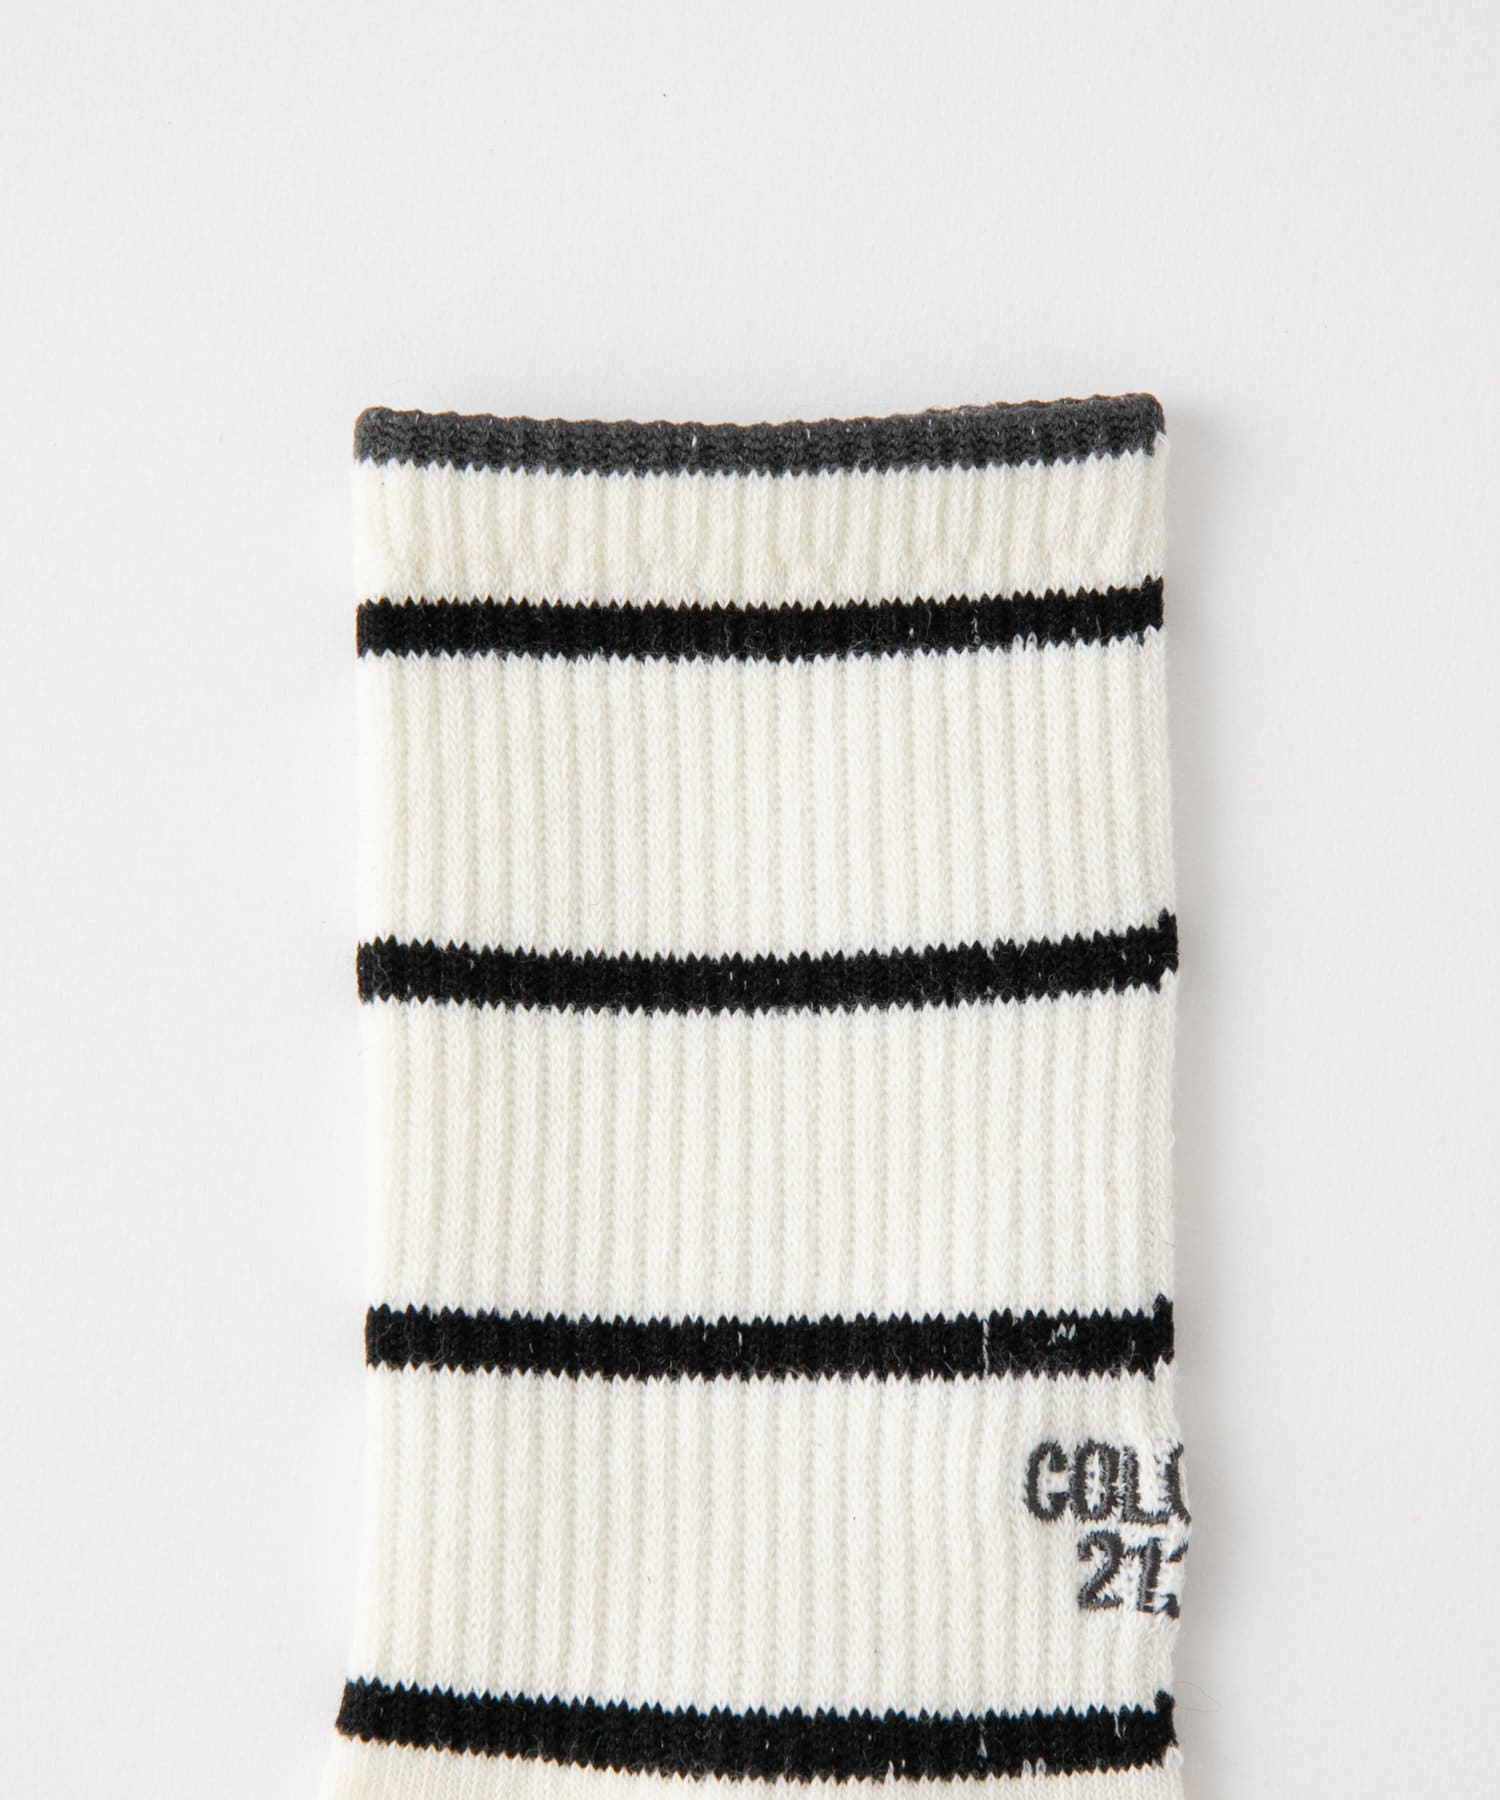 COLONY 2139(コロニー トゥーワンスリーナイン) 細ボーダー刺繍ソックス